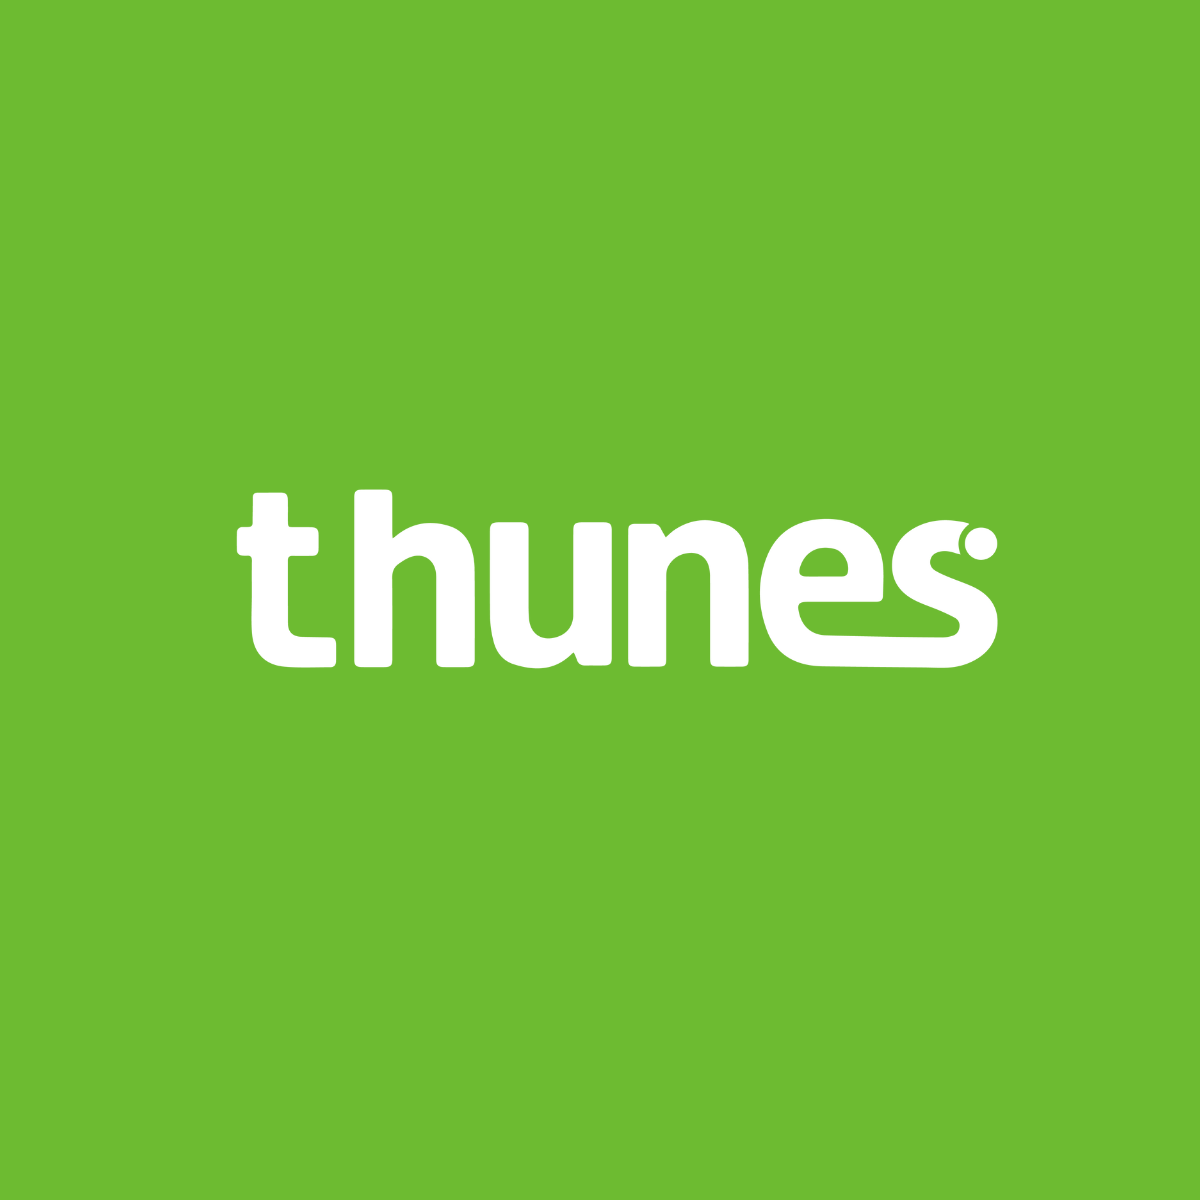 Thunes logo